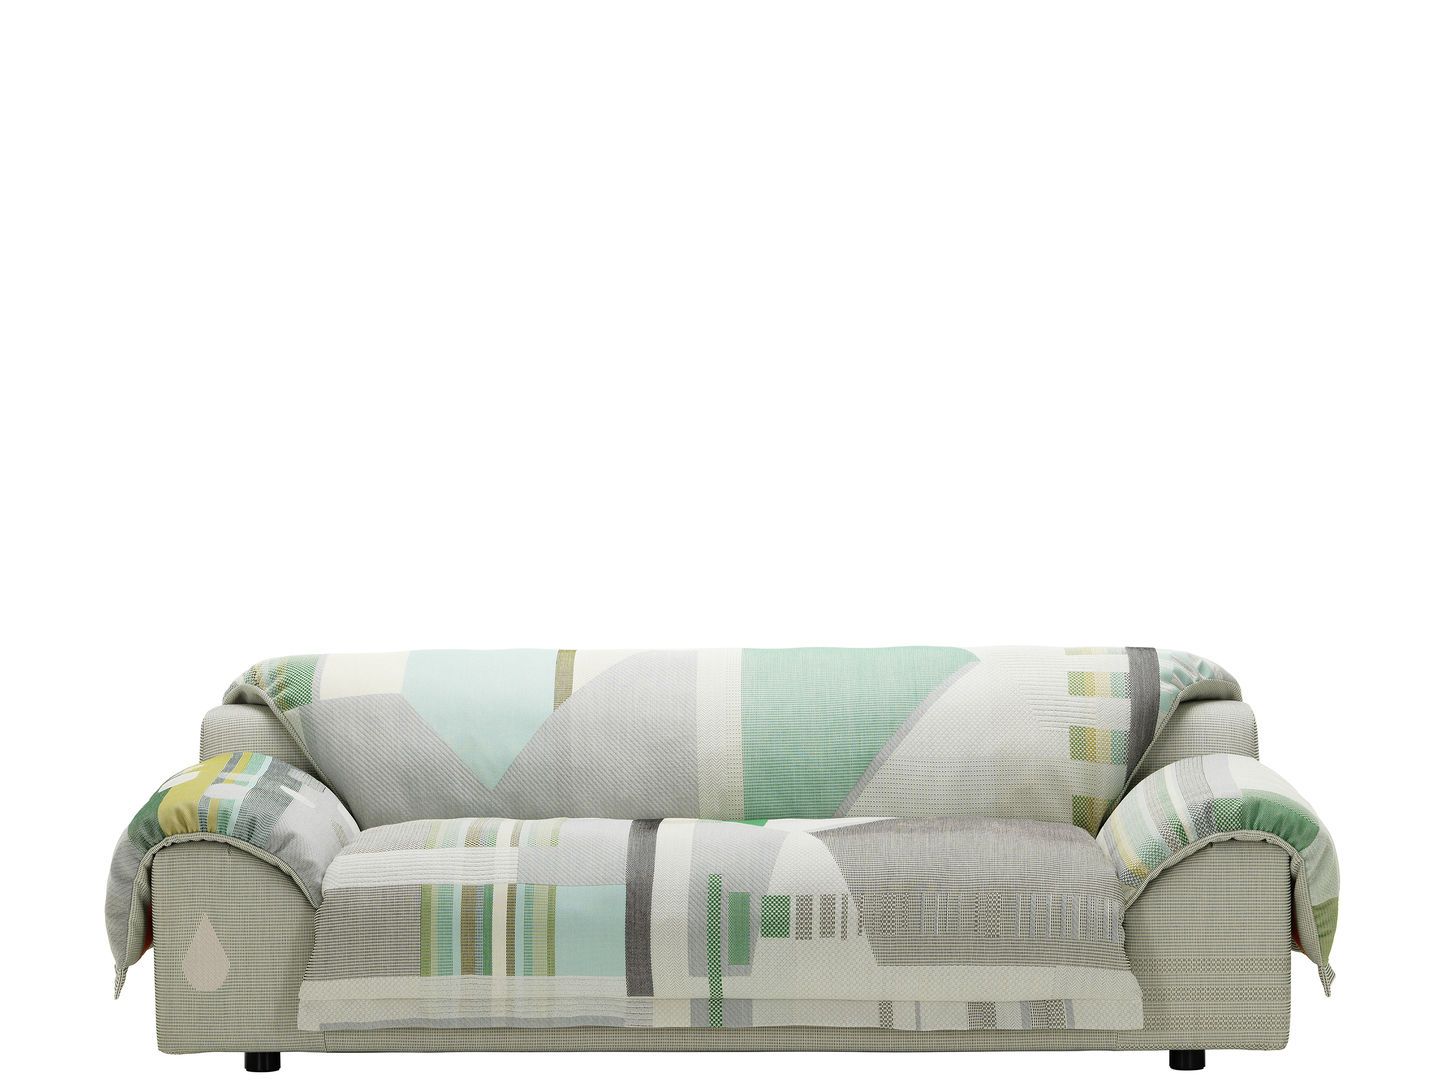 One52Furniture - Vitra Vlinder Sofa - Modern Design Upholstered Sofa with Butterfly-Shaped Backrest.